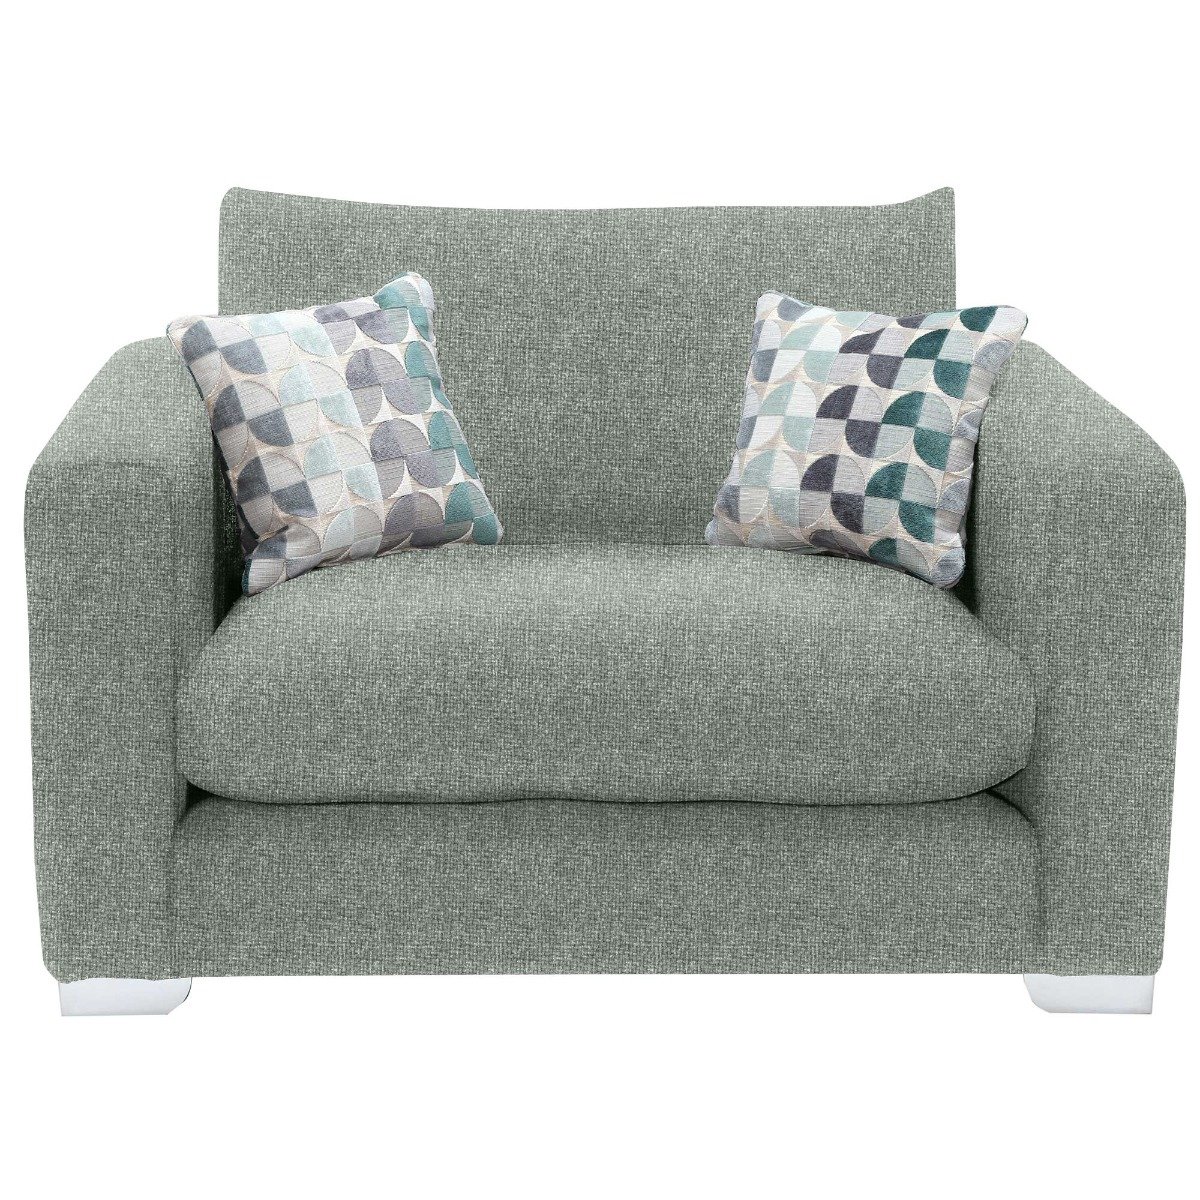 Fontella Snuggler Snuggle Chair, Blue Fabric | Barker & Stonehouse